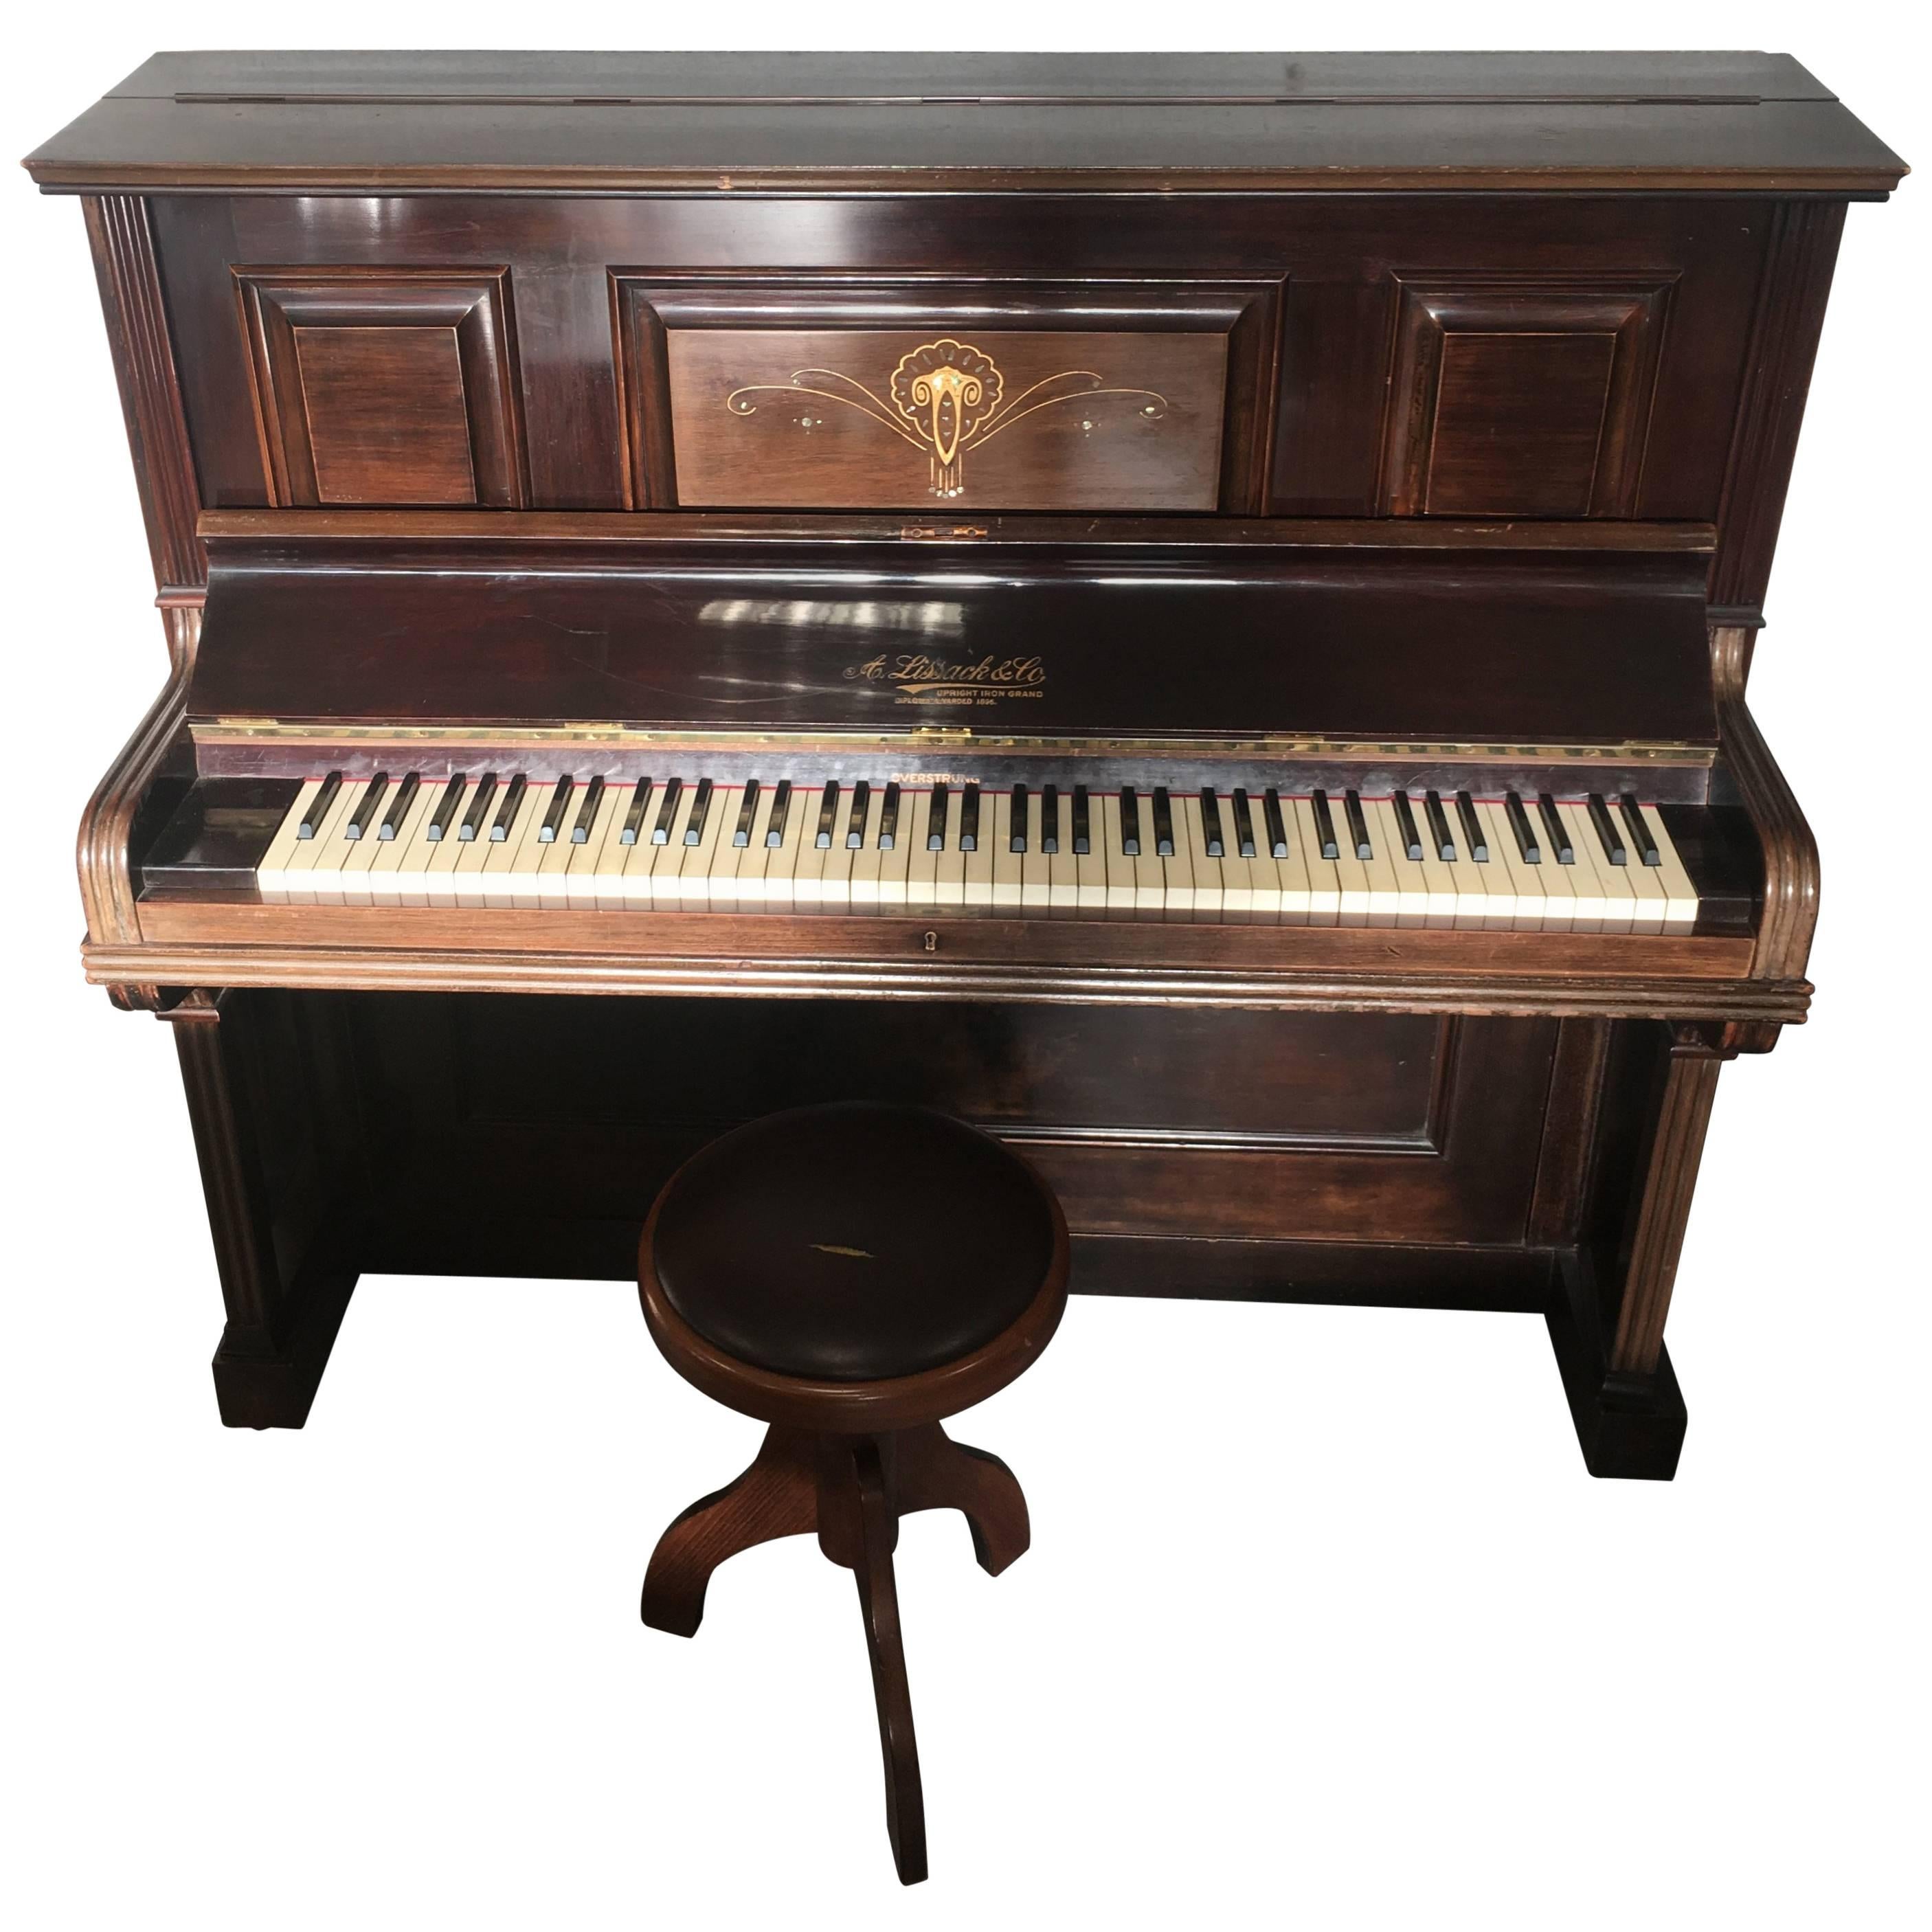 1896 Lissack & Co London Upright Iron Gand Diploma Awarded Piano